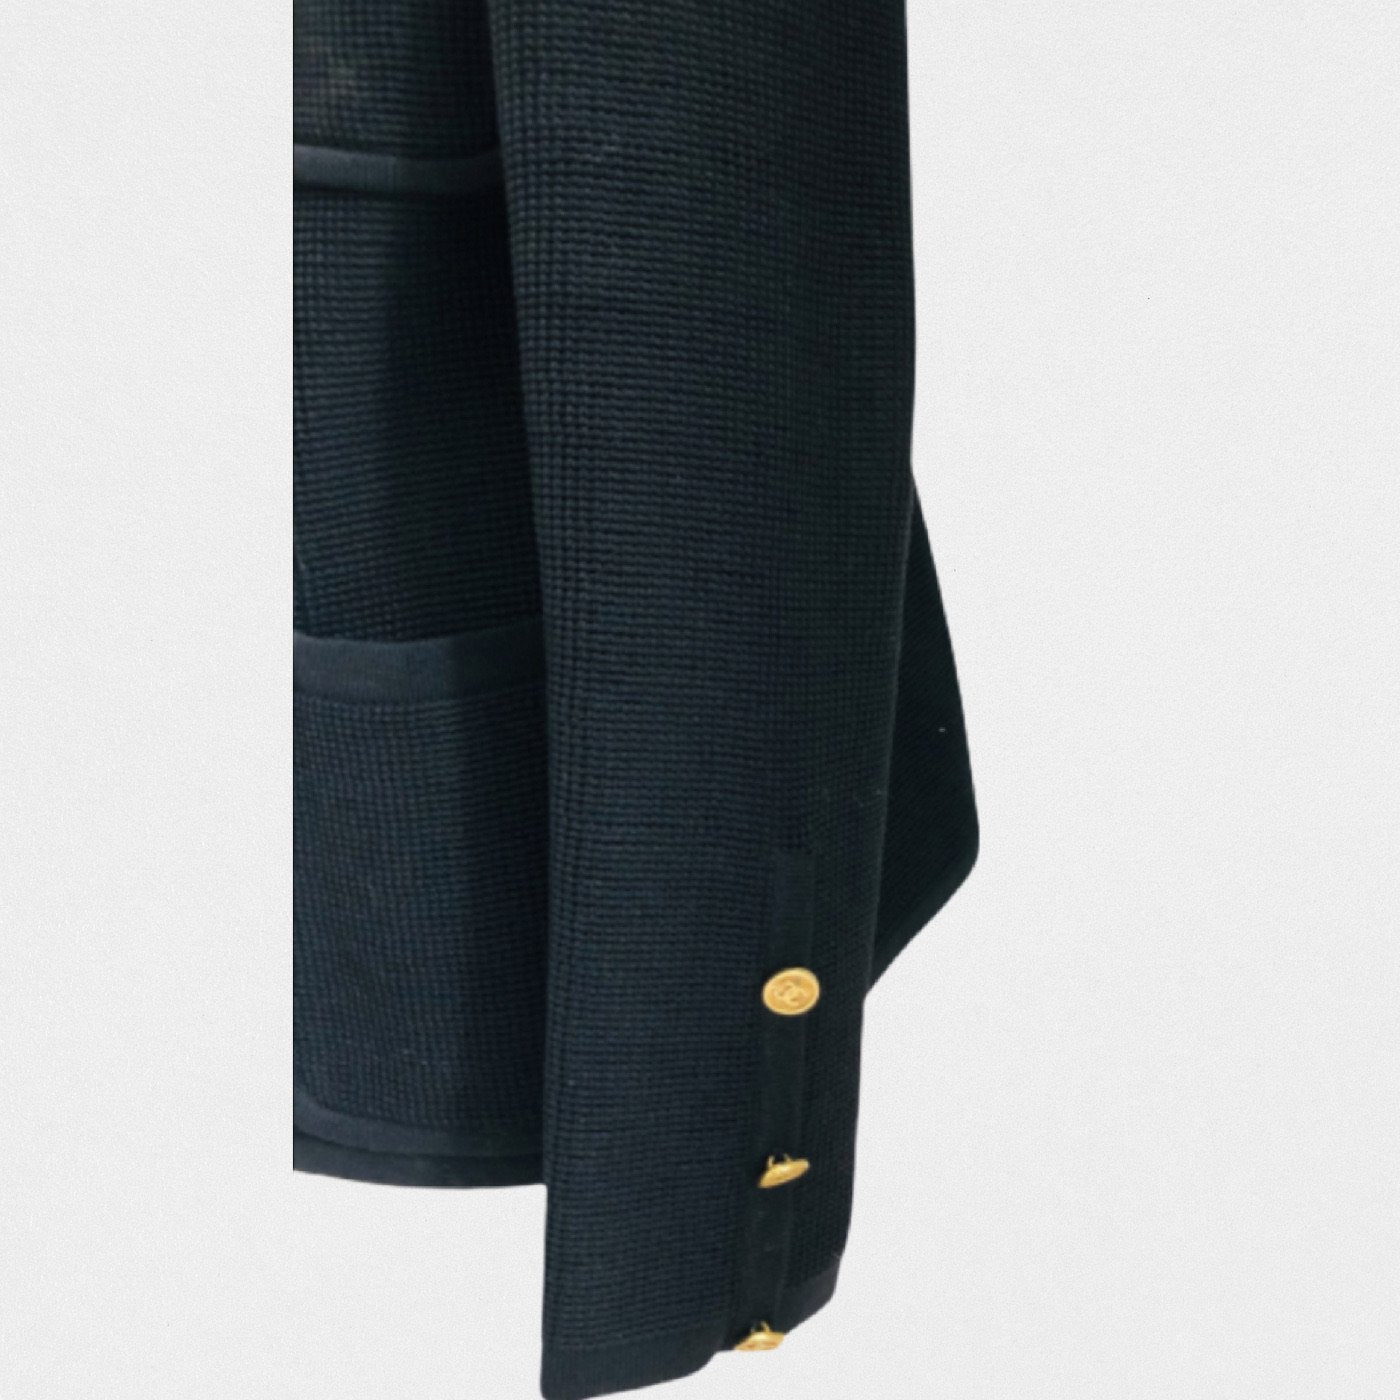 Lysis vintage Chanel knit cardigan - M - 1990s